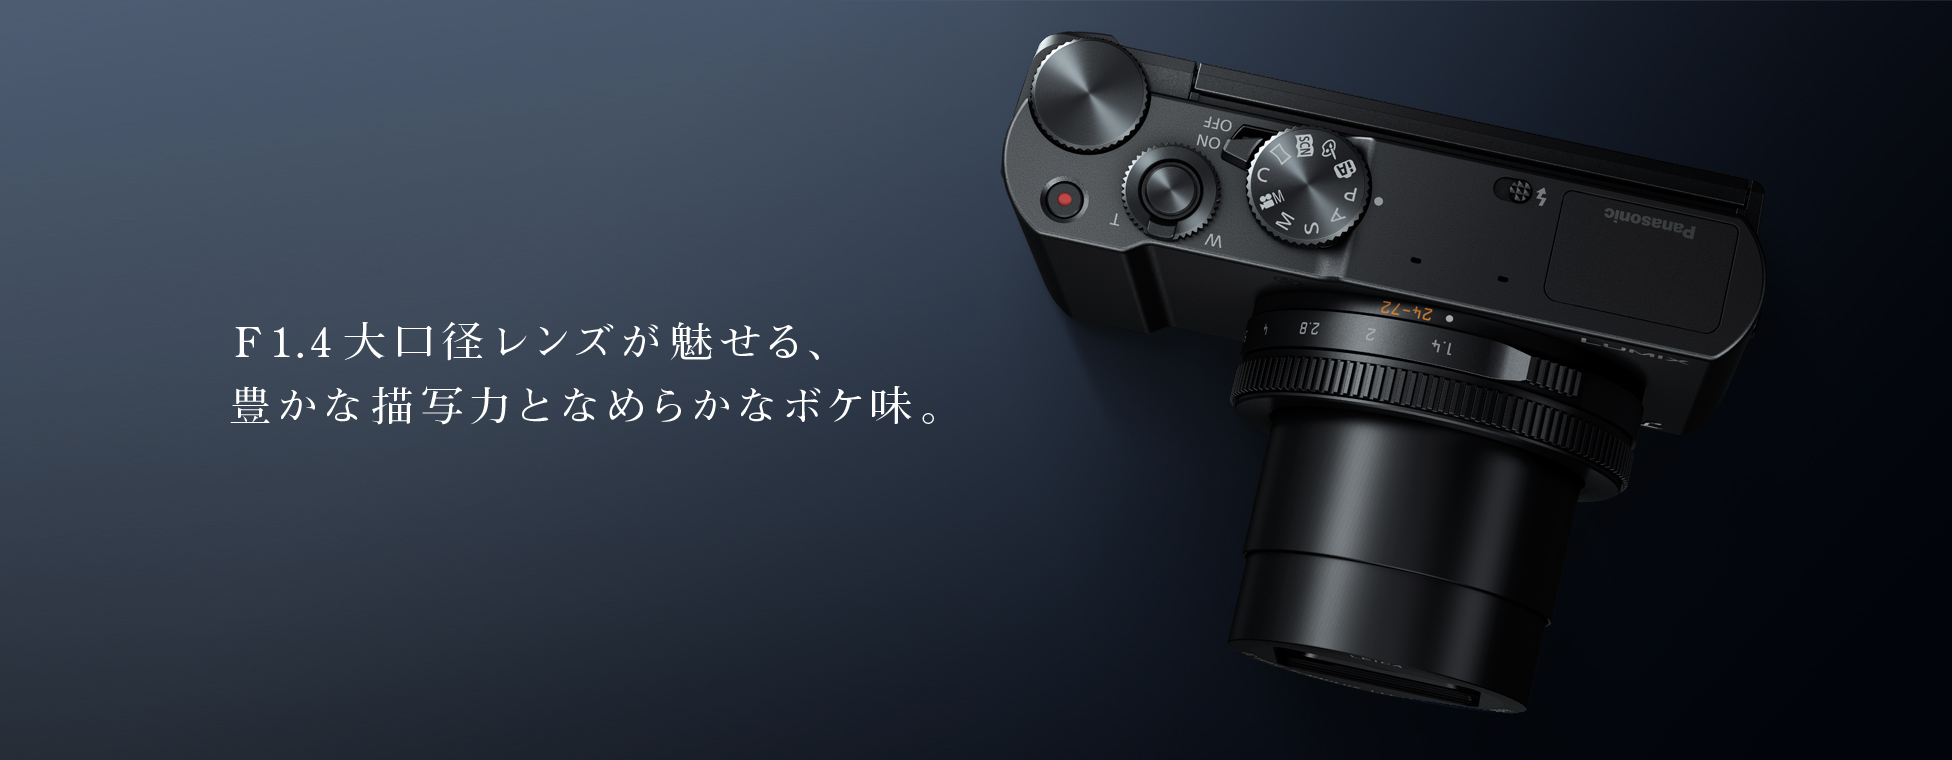 DMC-LX9｜デジタルカメラ LUMIX（ルミックス）｜ Panasonic